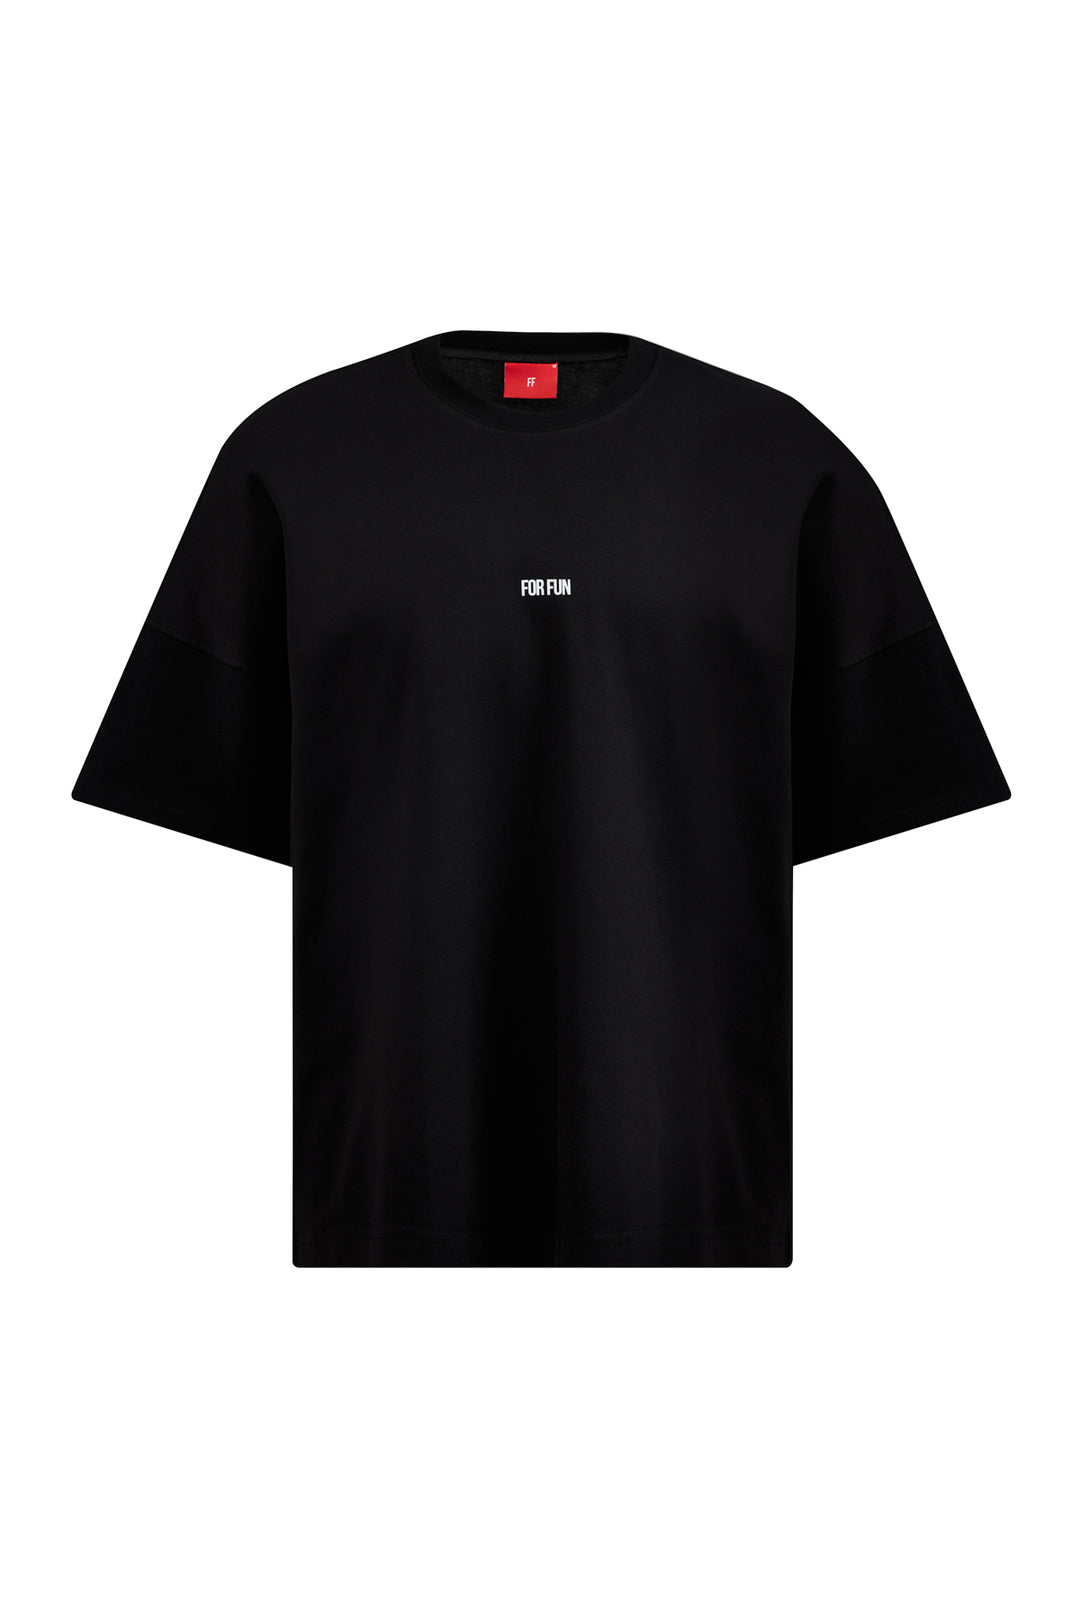 For Fun / Drop Shoulder Oversize T-shirt